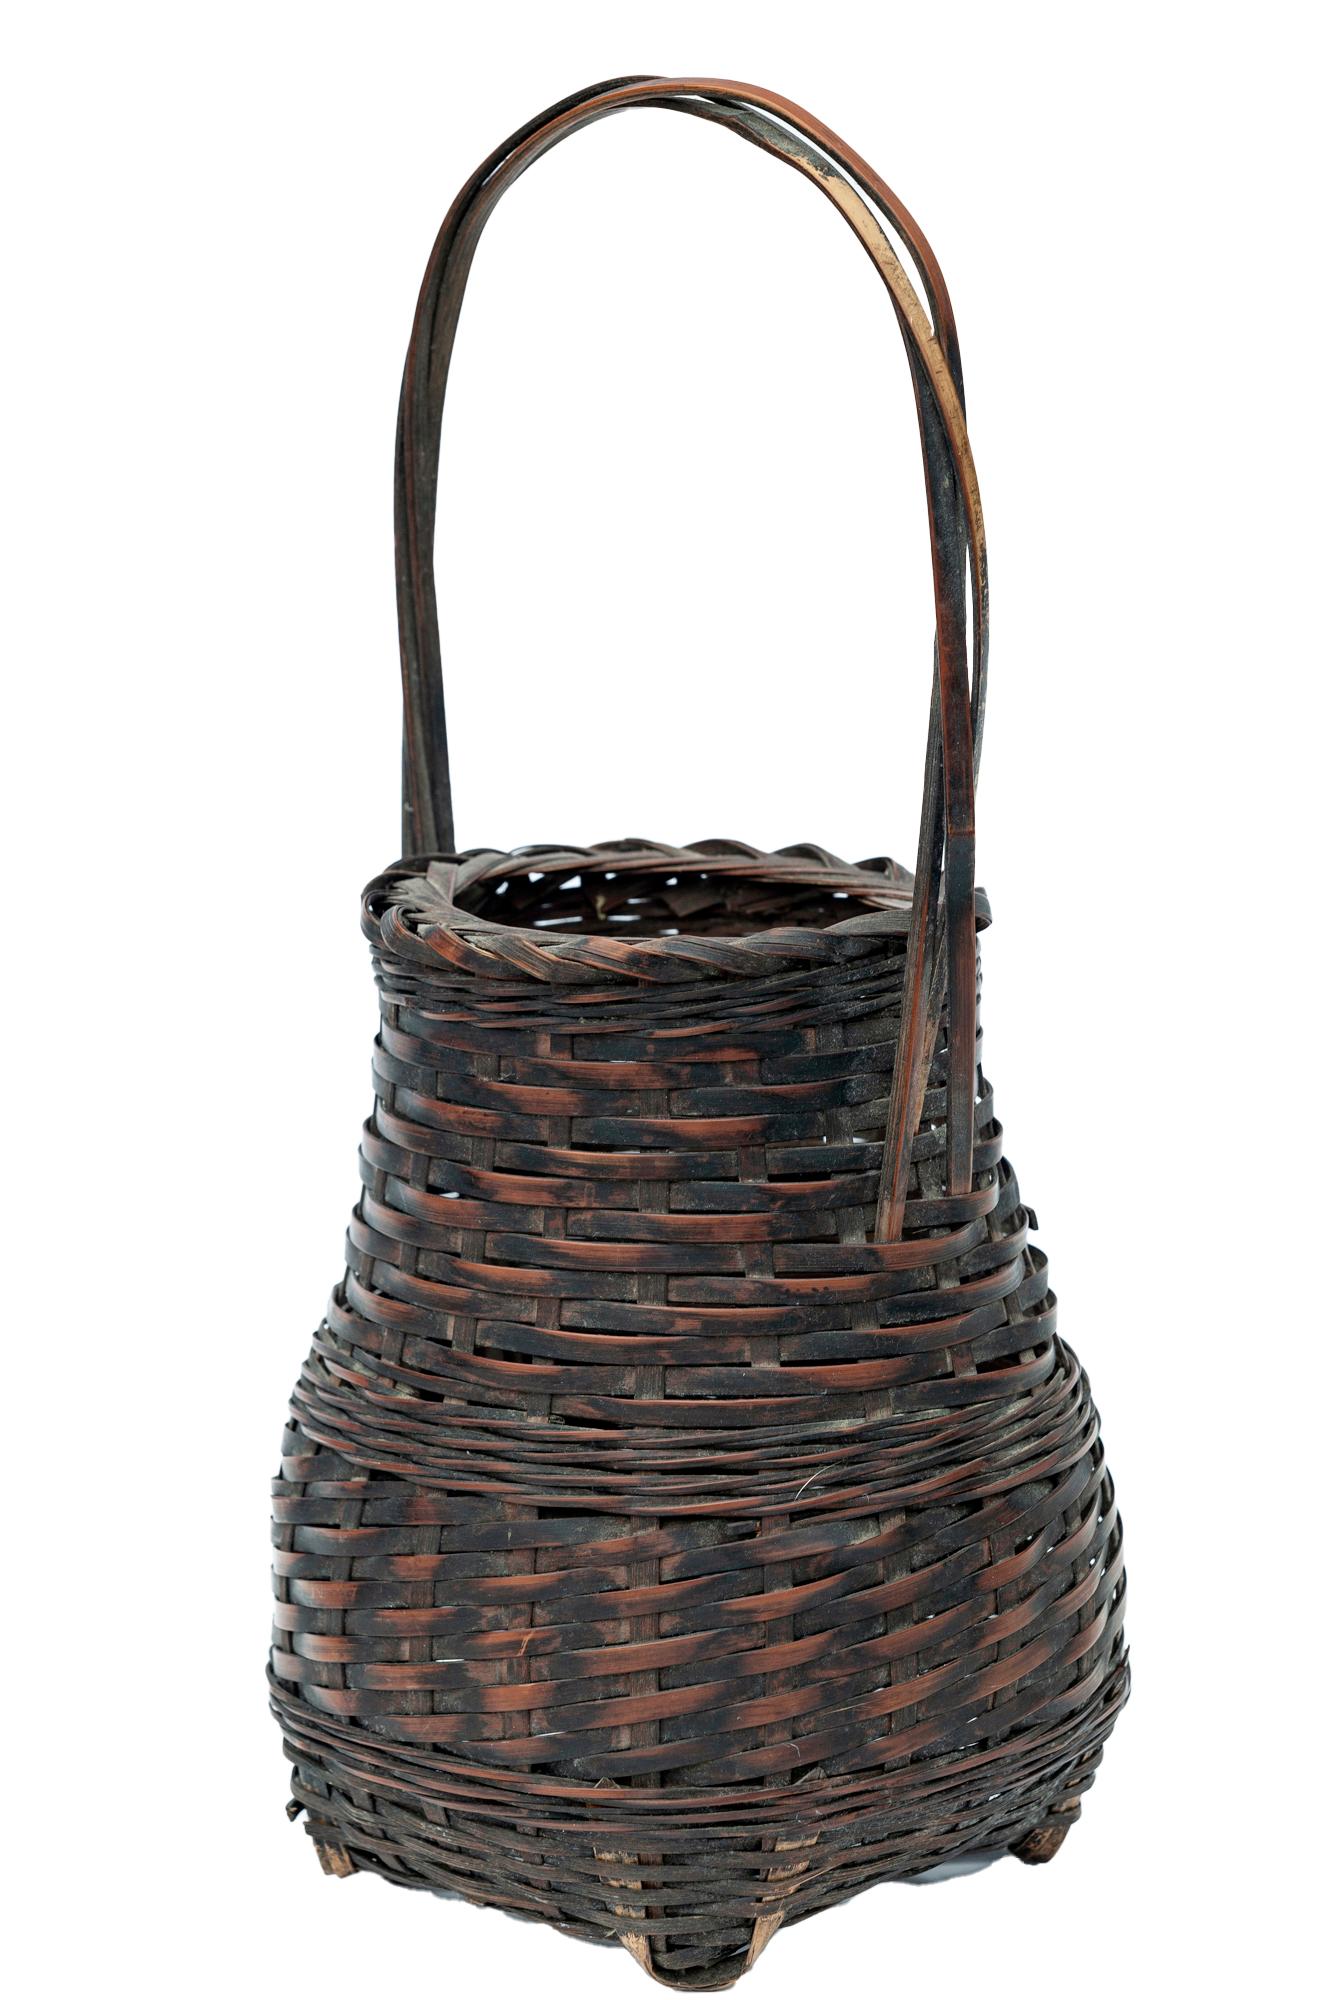 Finely woven Ikebana bamboo basket patinaed surface.